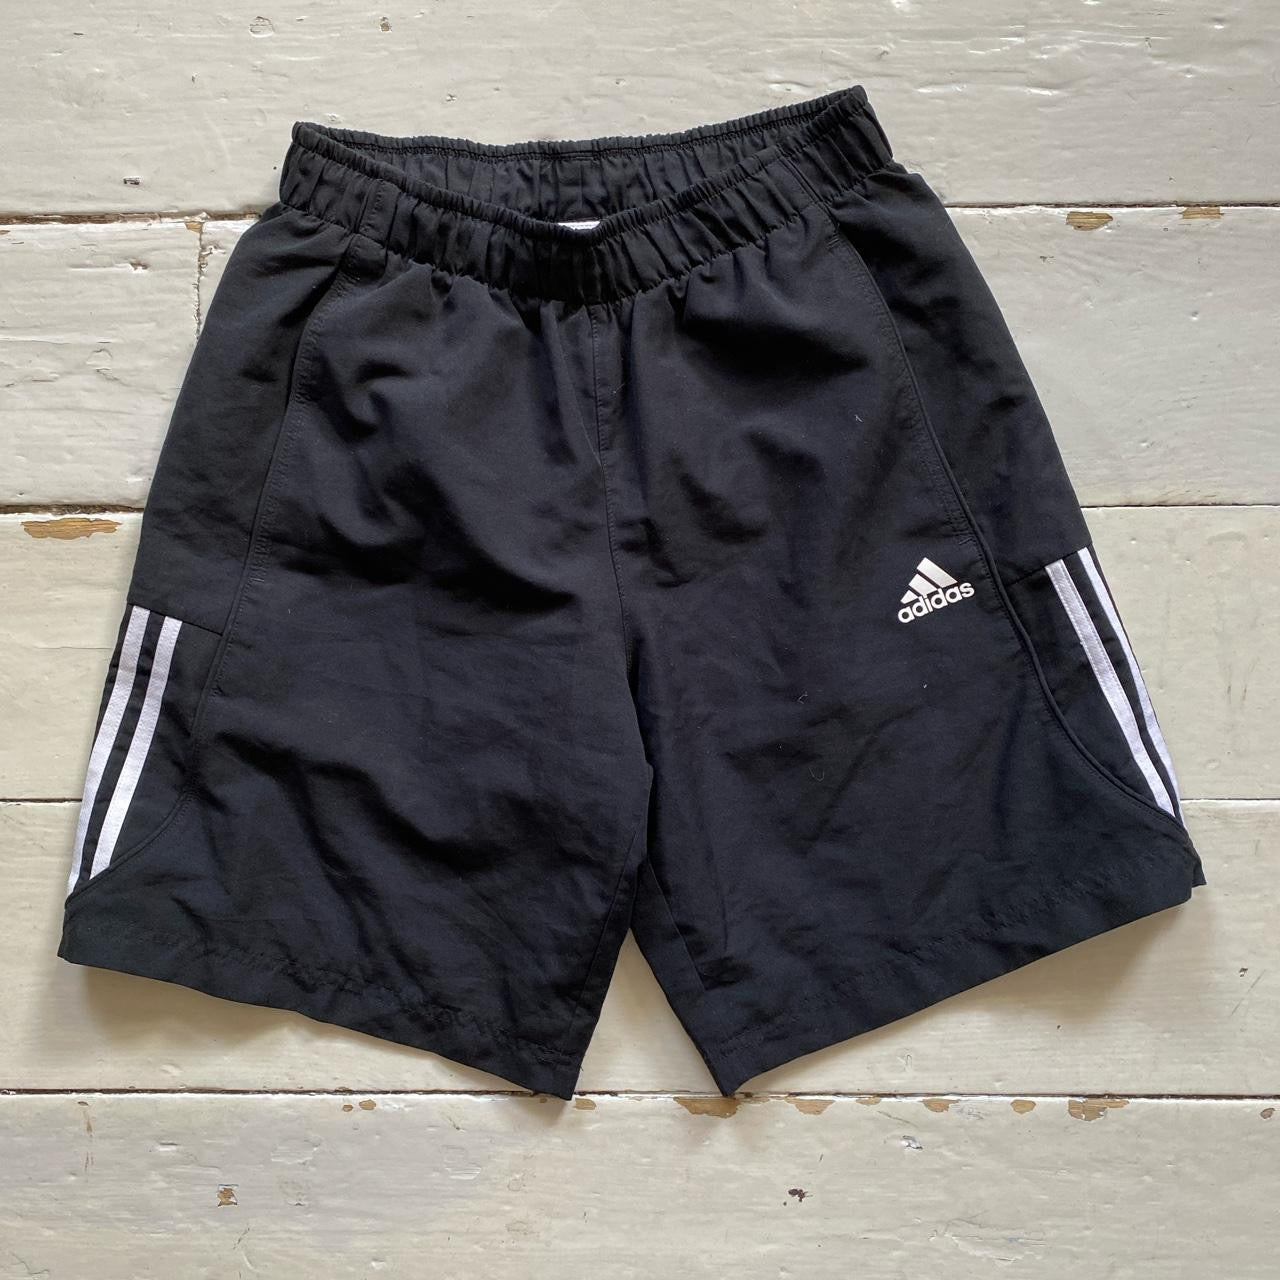 Adidas Black Shell Shorts (Small)